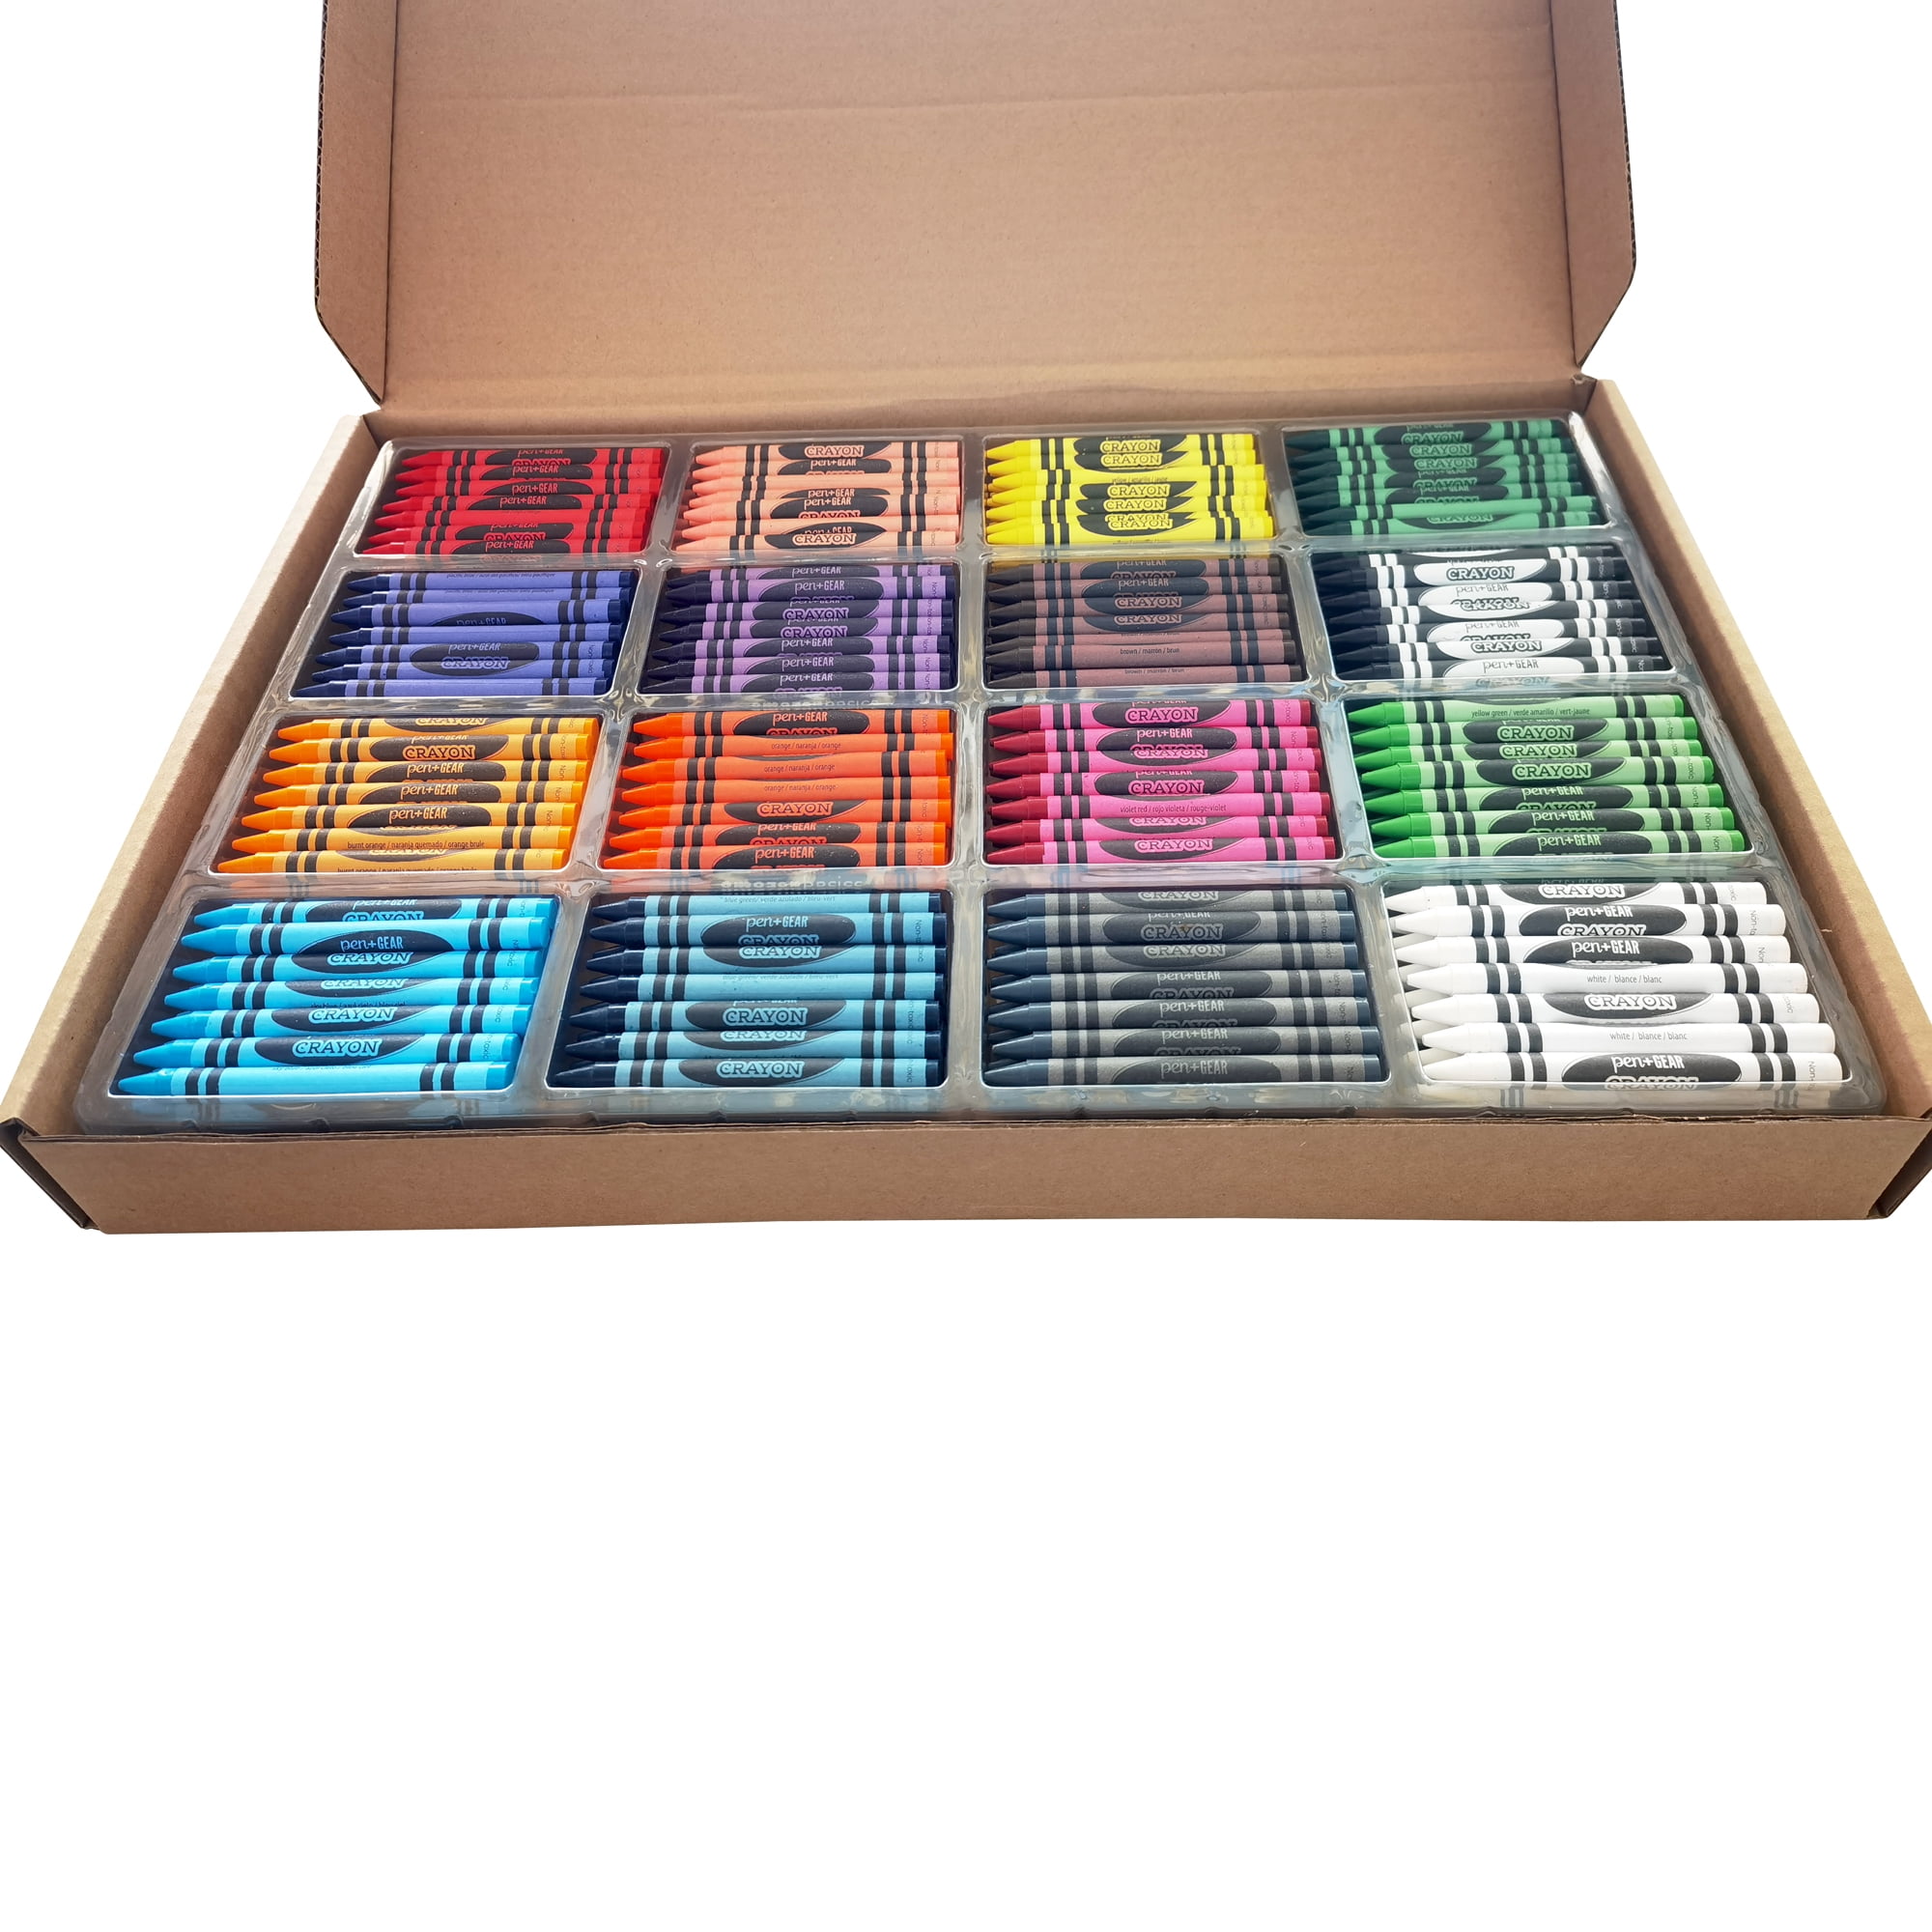 Pen Bundle Pack! – Offensive Crayons